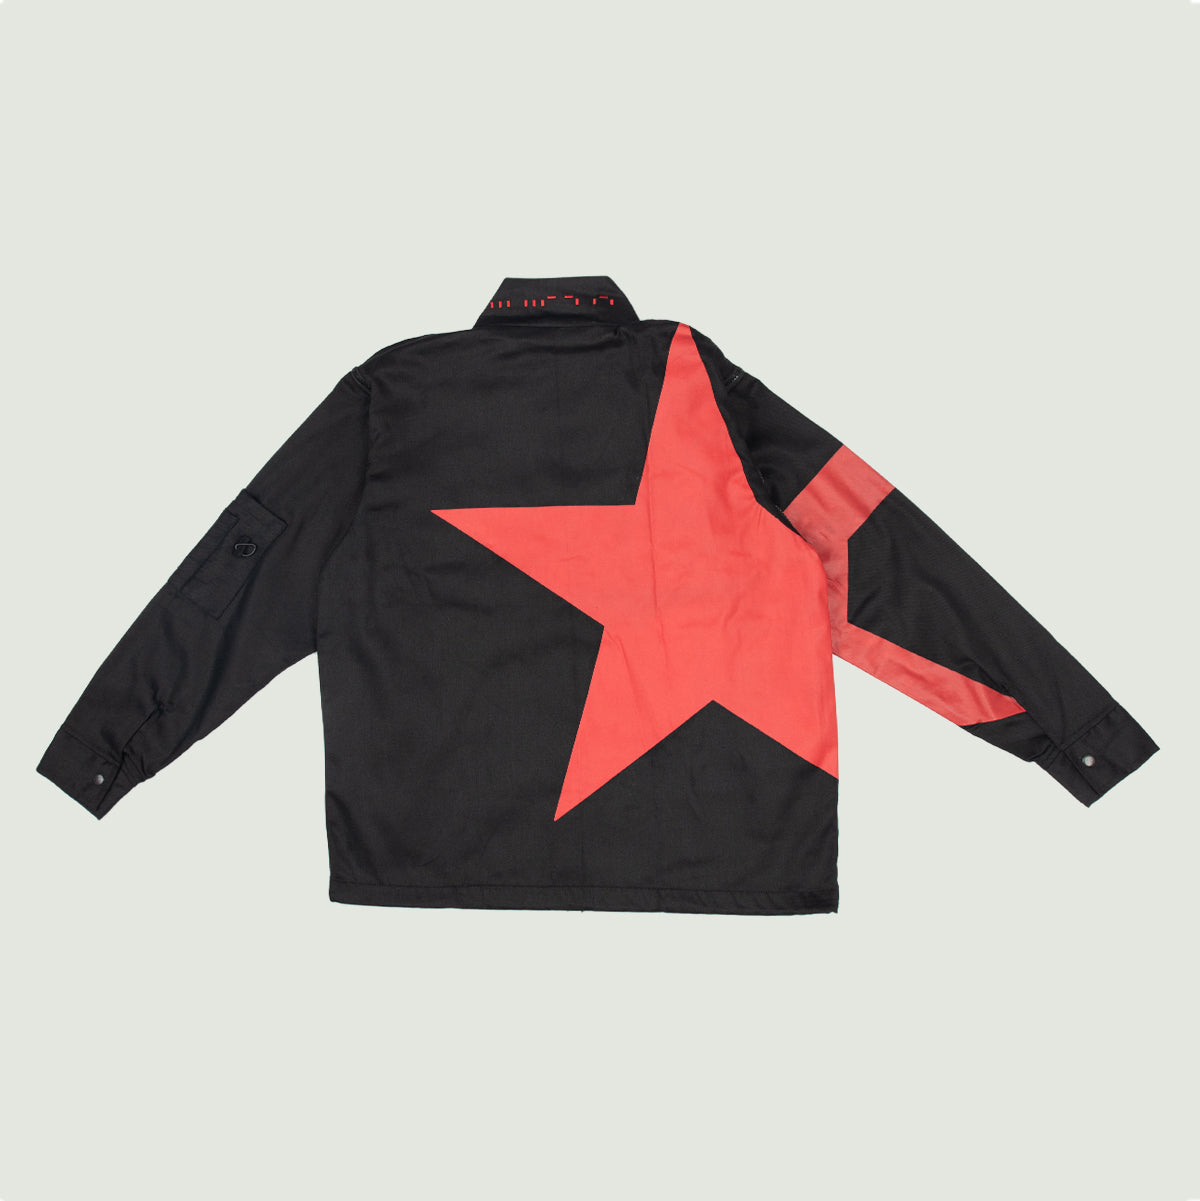 Militia Black/Red star jacket